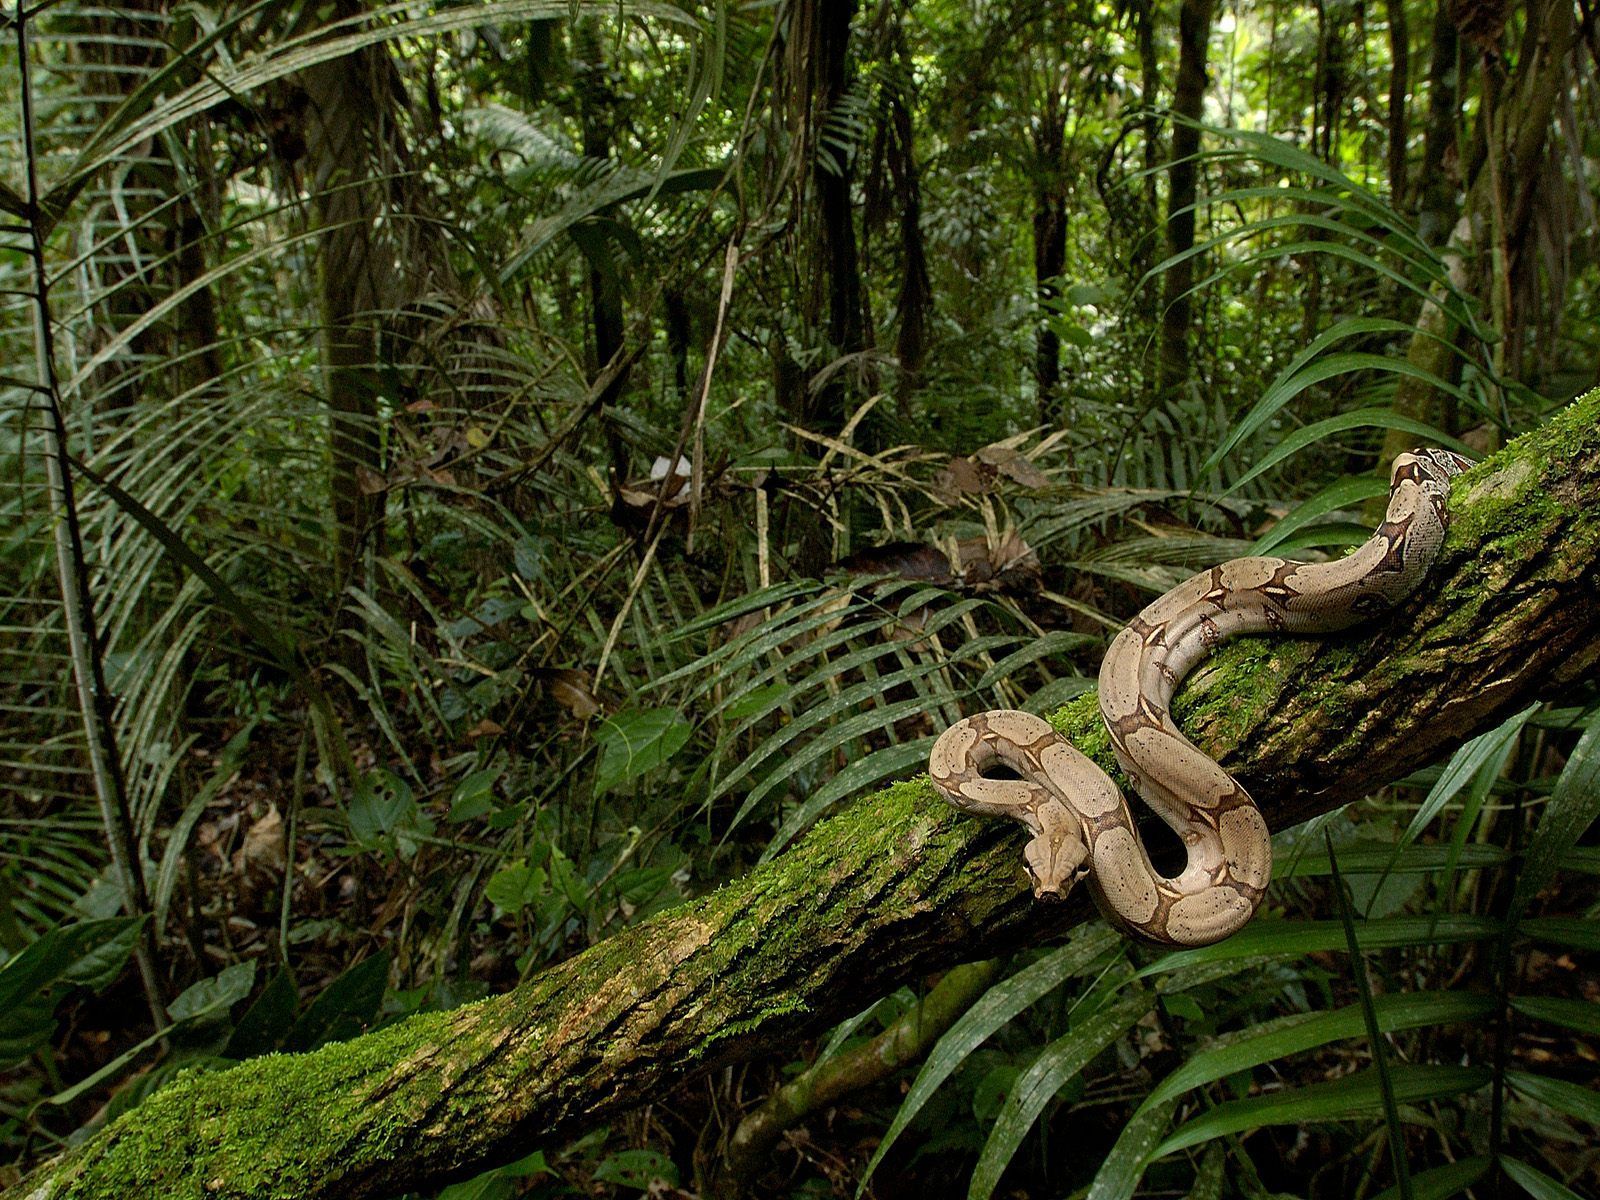 Congo rainforest, Rainforest animals .com